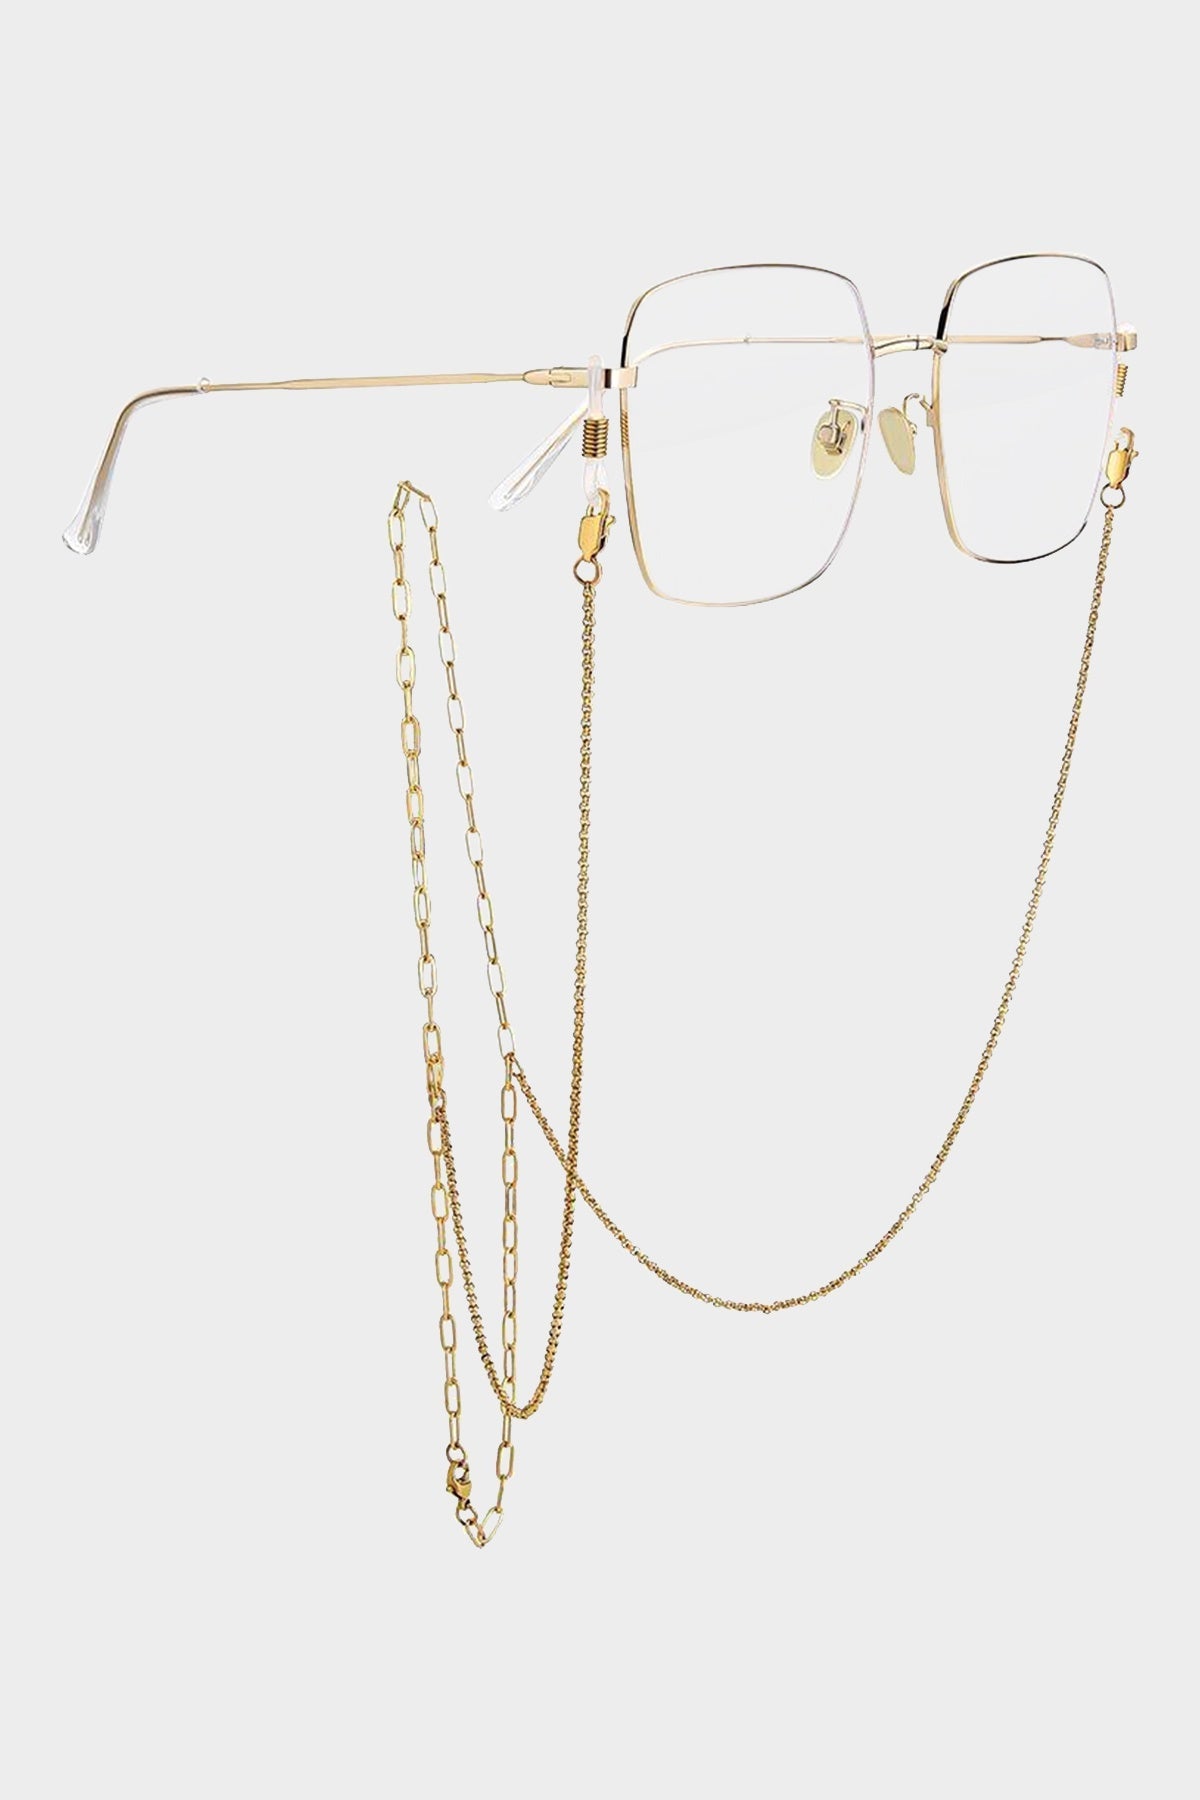 Staple 14K Gold Eyeglass Holder Necklace Chain